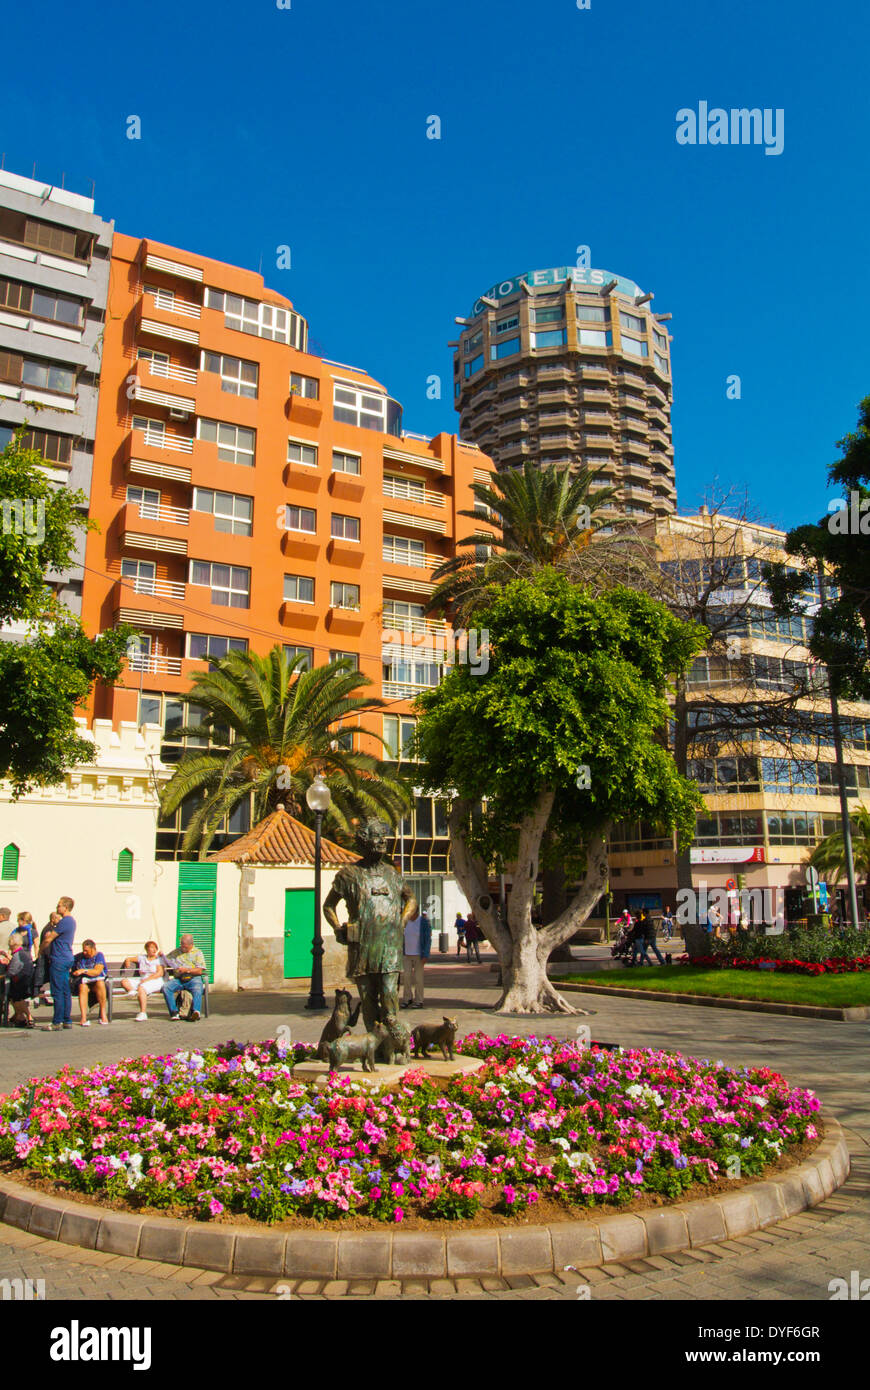 Parque Santa Catalina park square, Las Palmas de Gran Canaria, Gran Canaria Island, the Canary Islands, Spain, Europe Stock Photo -